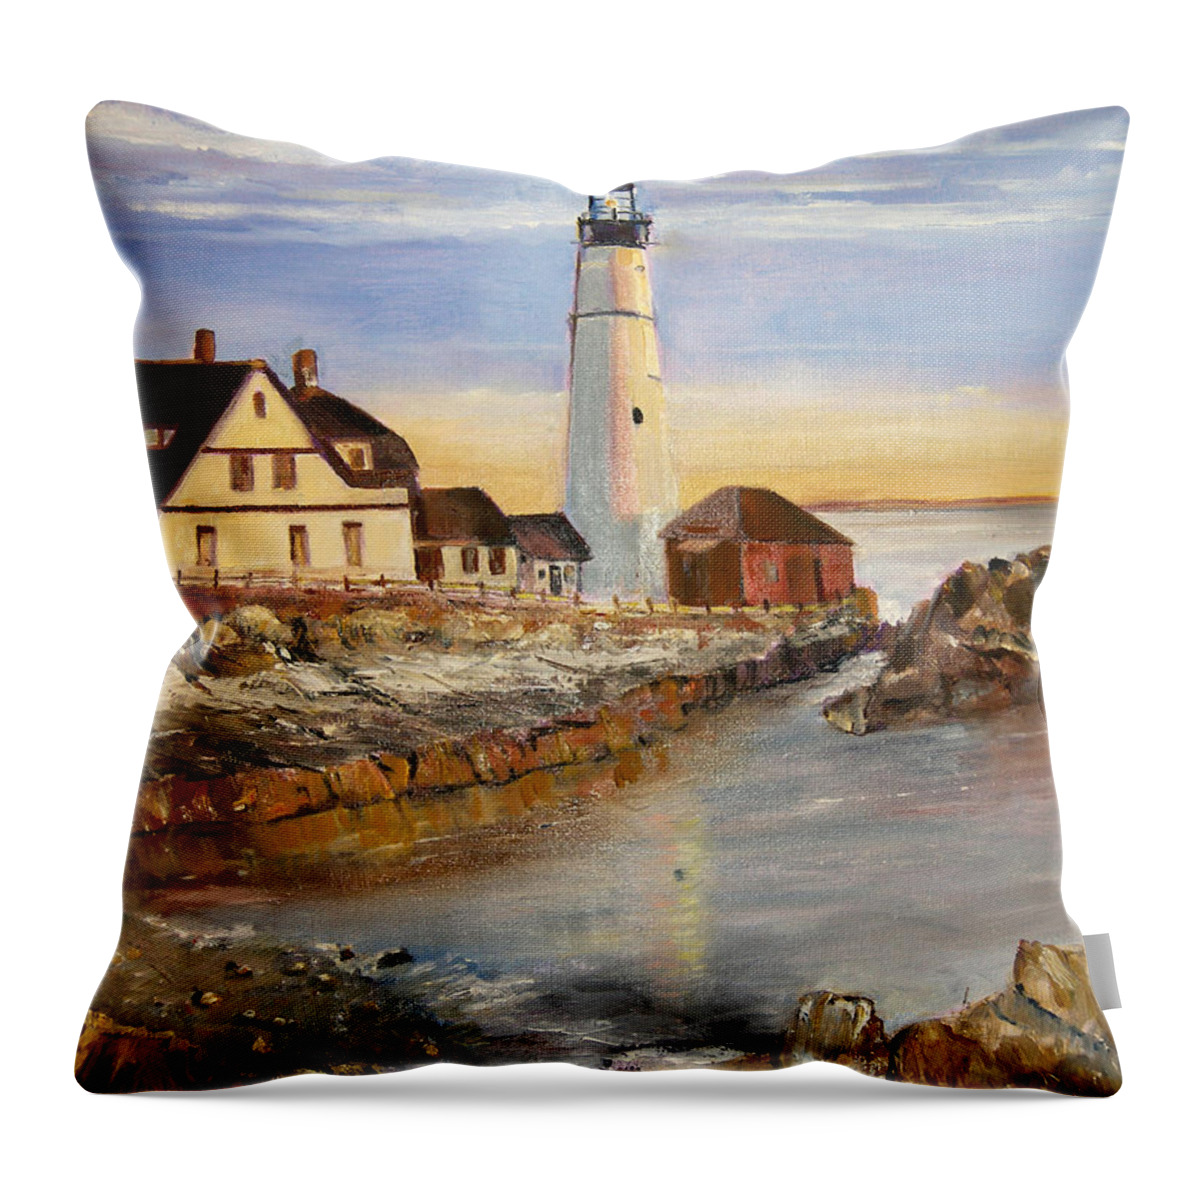 Boston Throw Pillow featuring the painting Boston rocky coast by Arlen Avernian - Thorensen